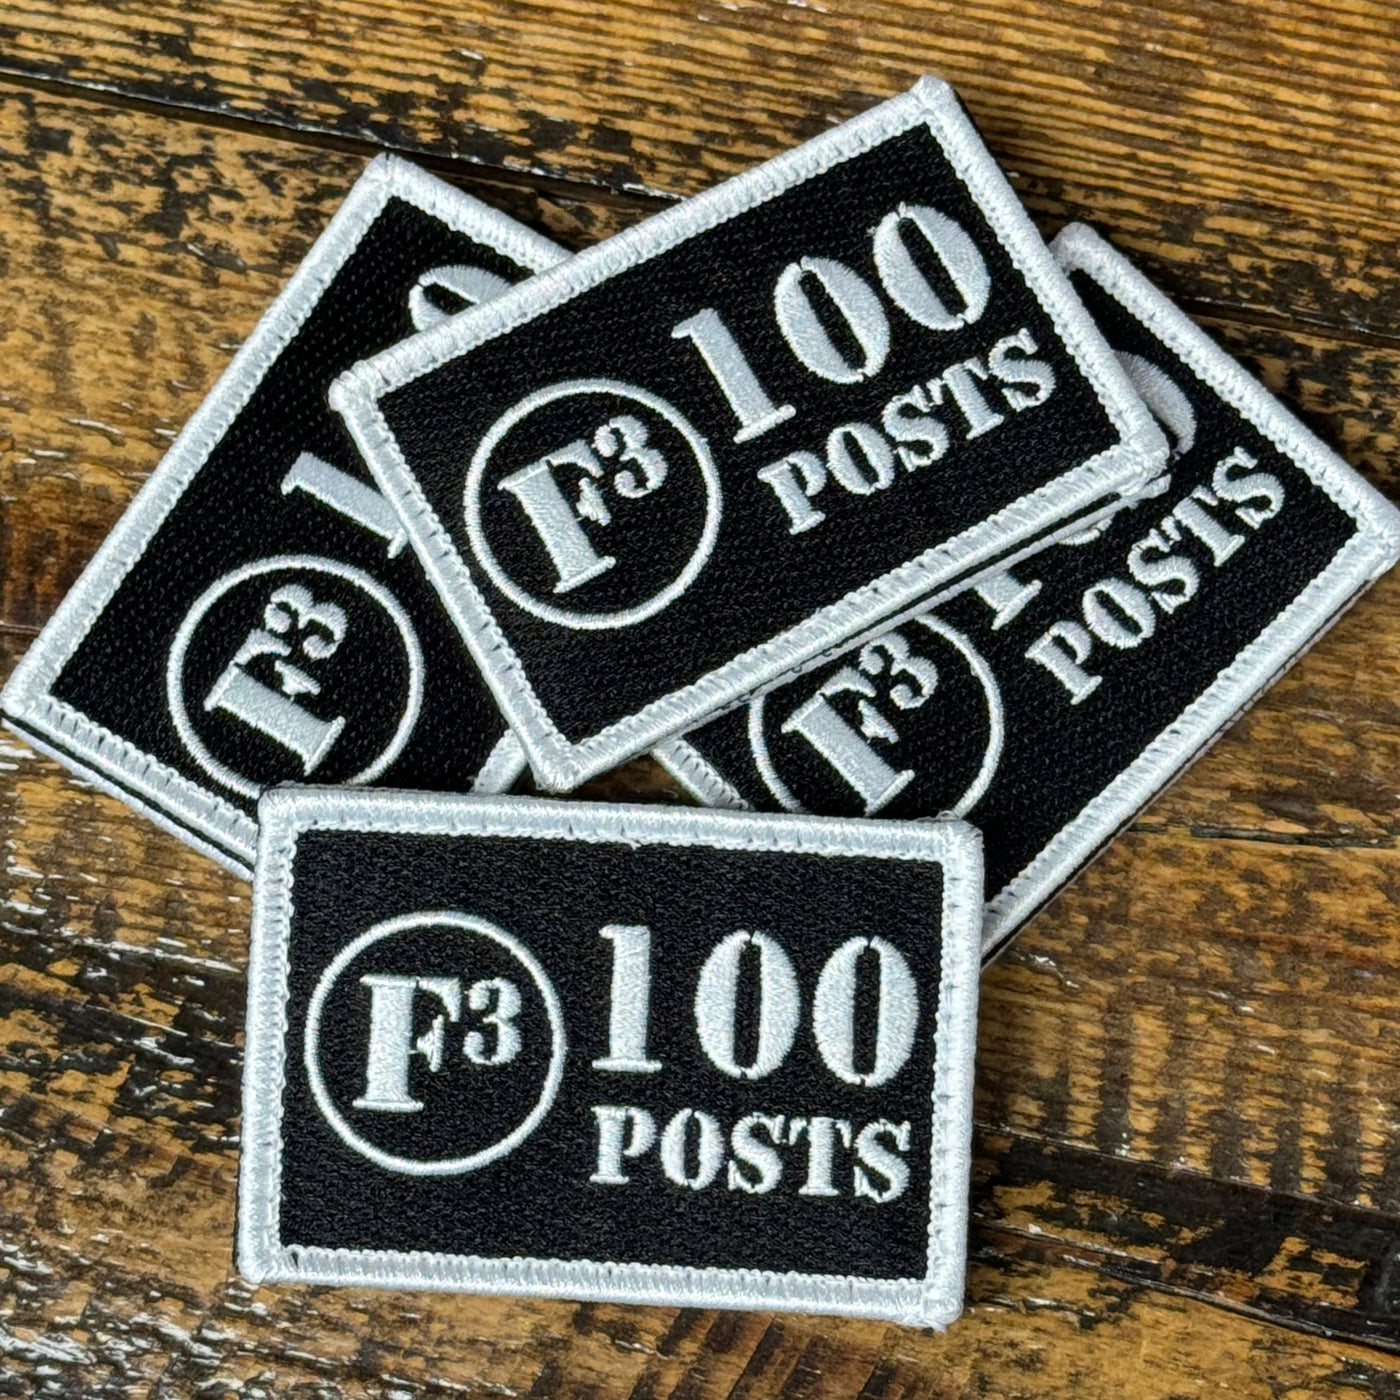 F3 100 Posts Patch